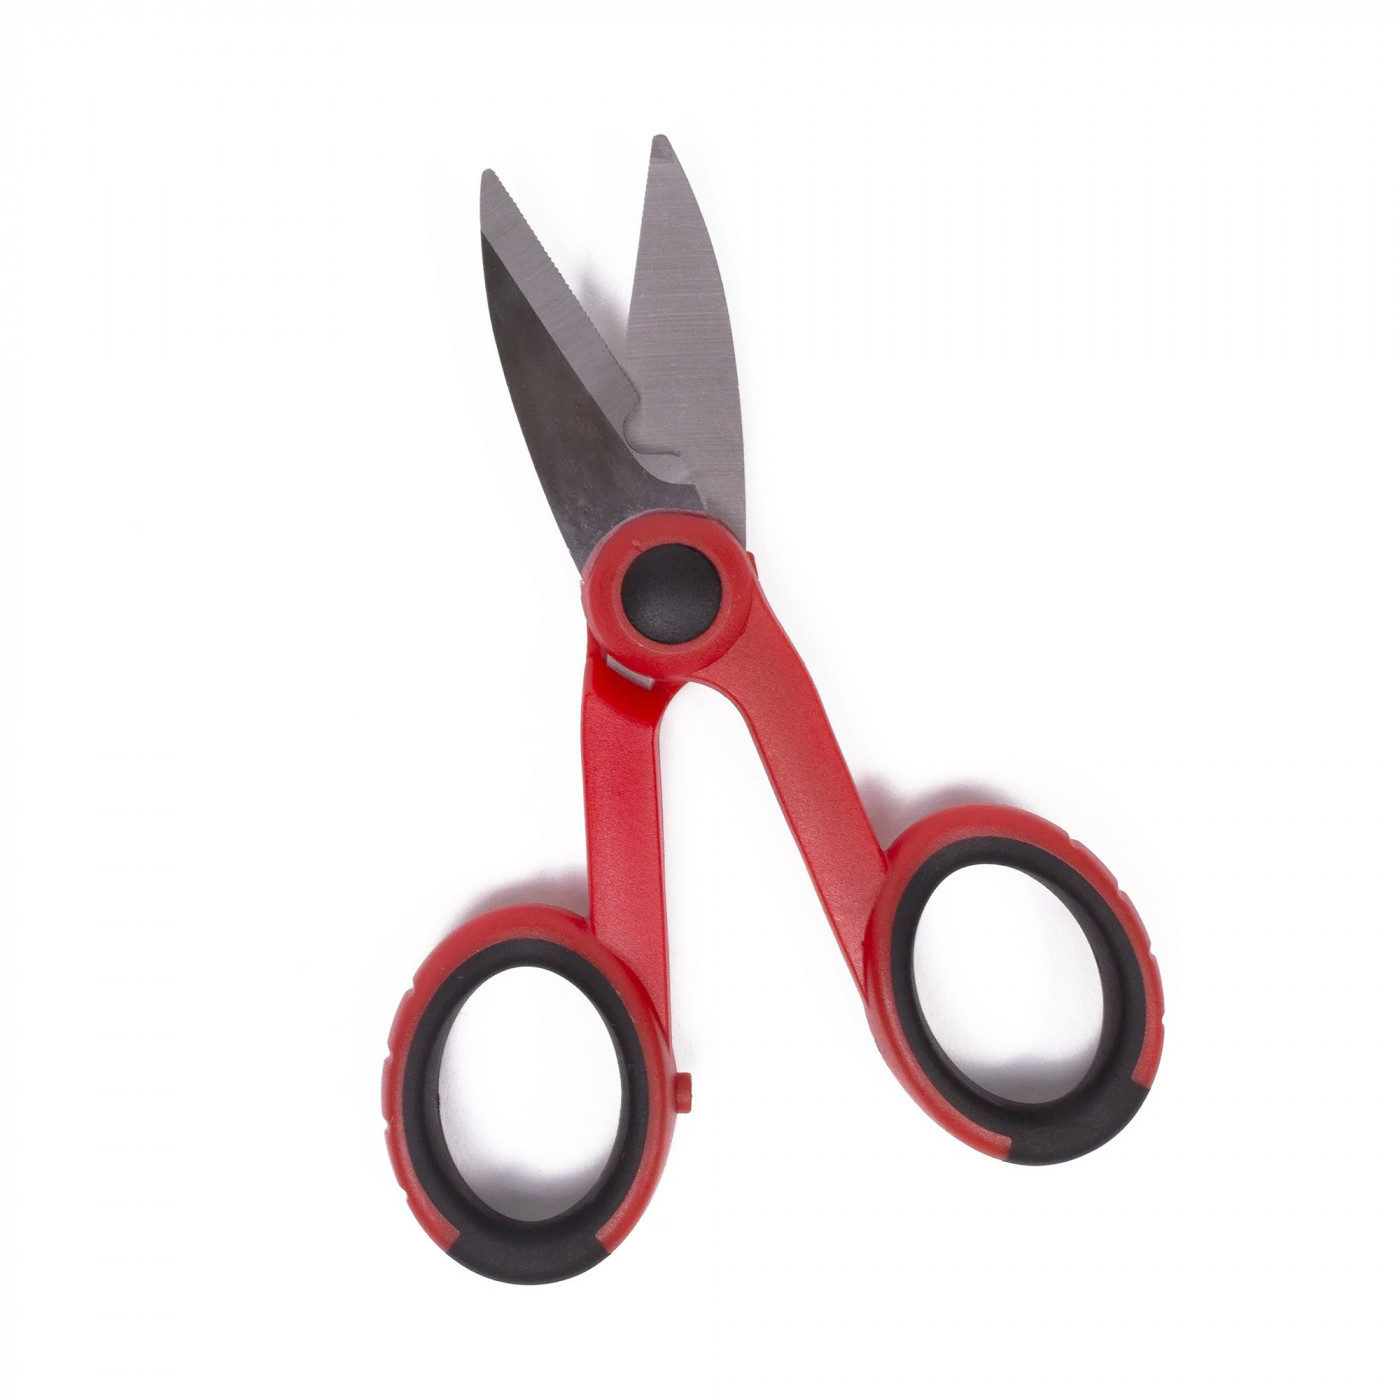 https://www.woodtoolsanddeco.com/10414-large_default/universal-all-purpose-cutter-scissors-14-cm.jpg